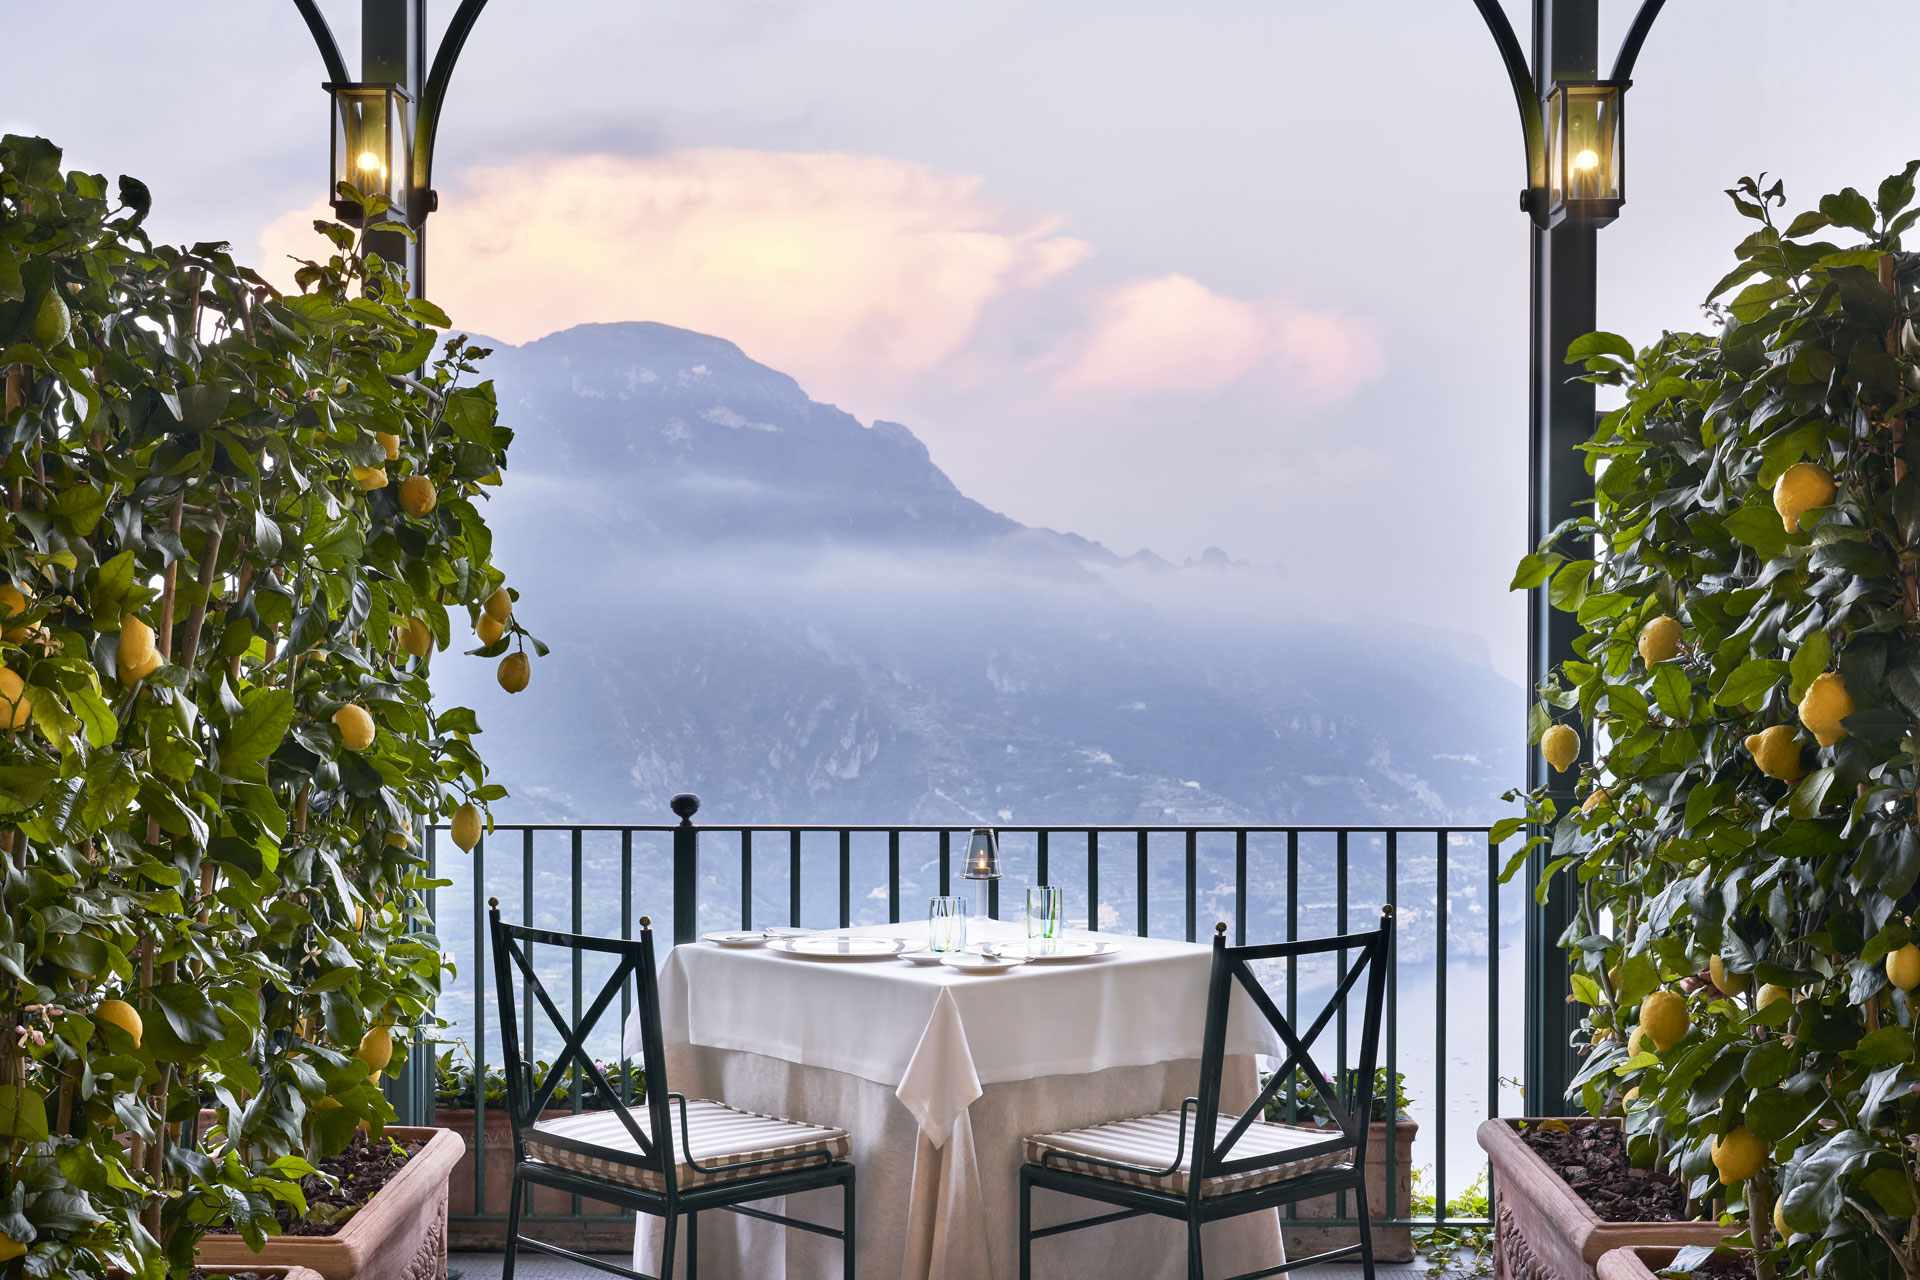 Rossellini’s at Palazzo Avino: Is This The Amalfi Coast’s Best Restaurant?